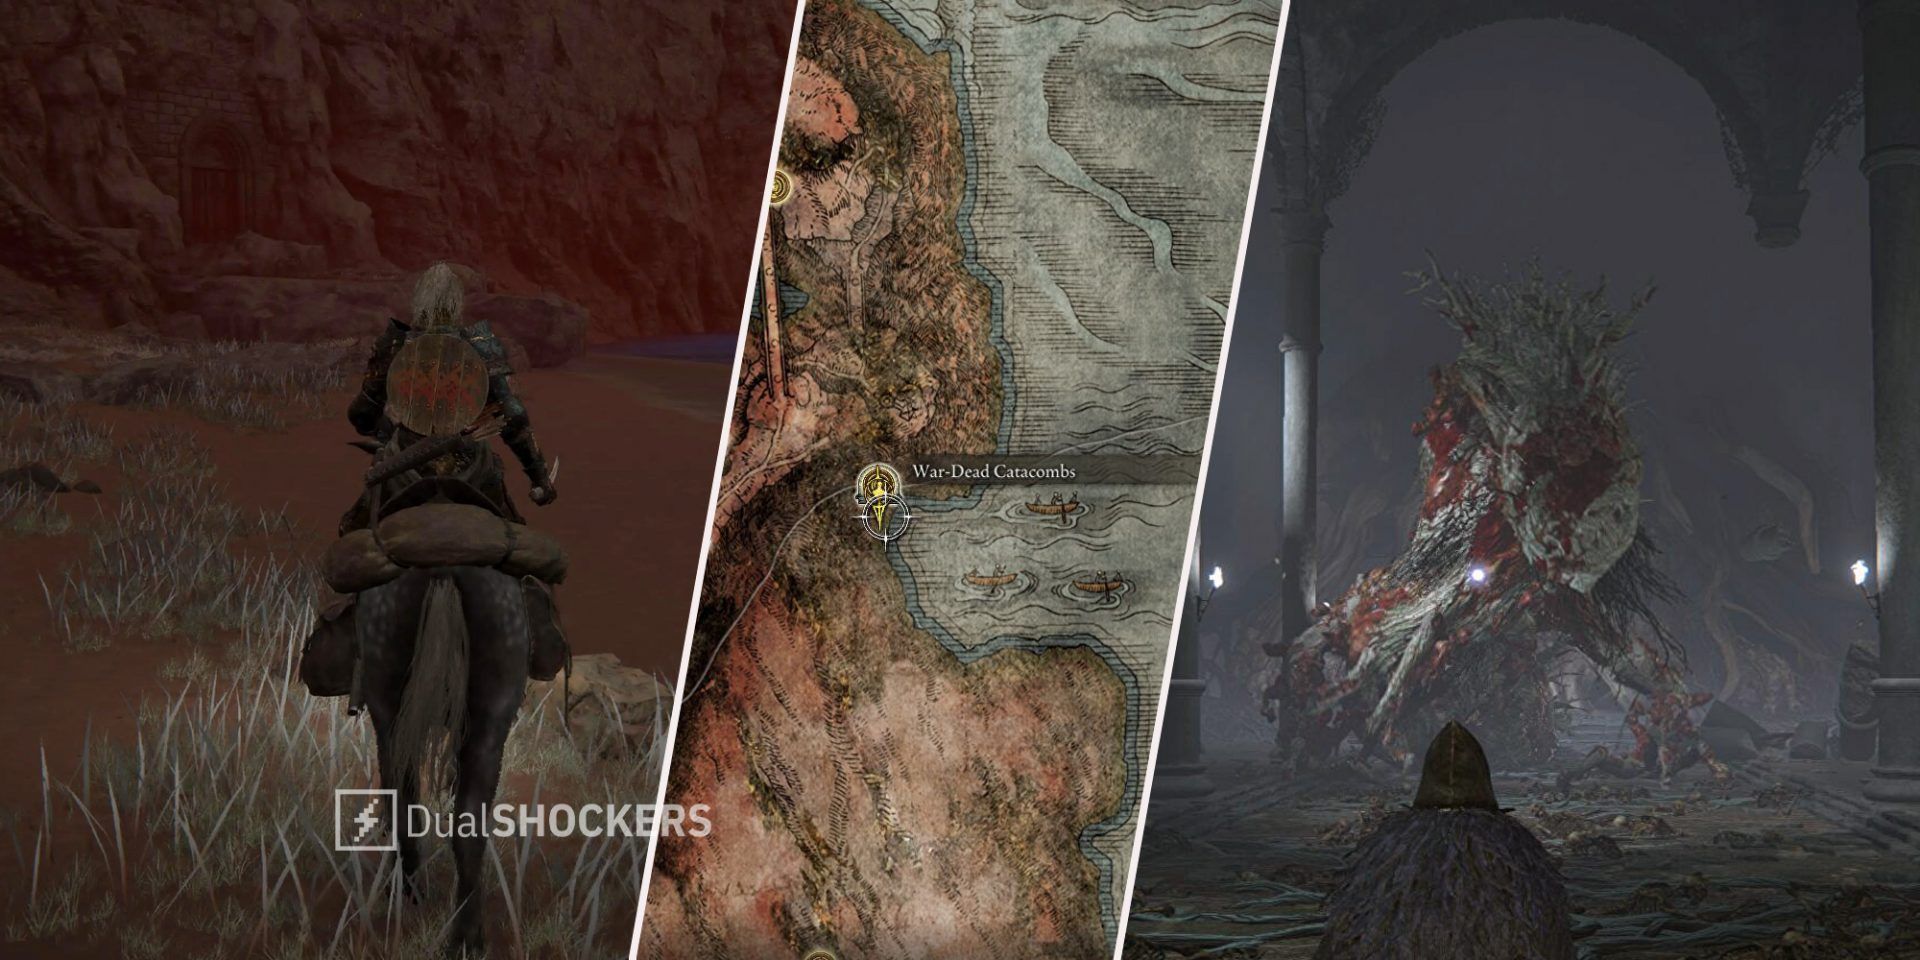 Elden Ring player in front of War-Dead Catacombs on left, War-Dead Catacombs on map in middle, Putrid Tree Spirit boss on right